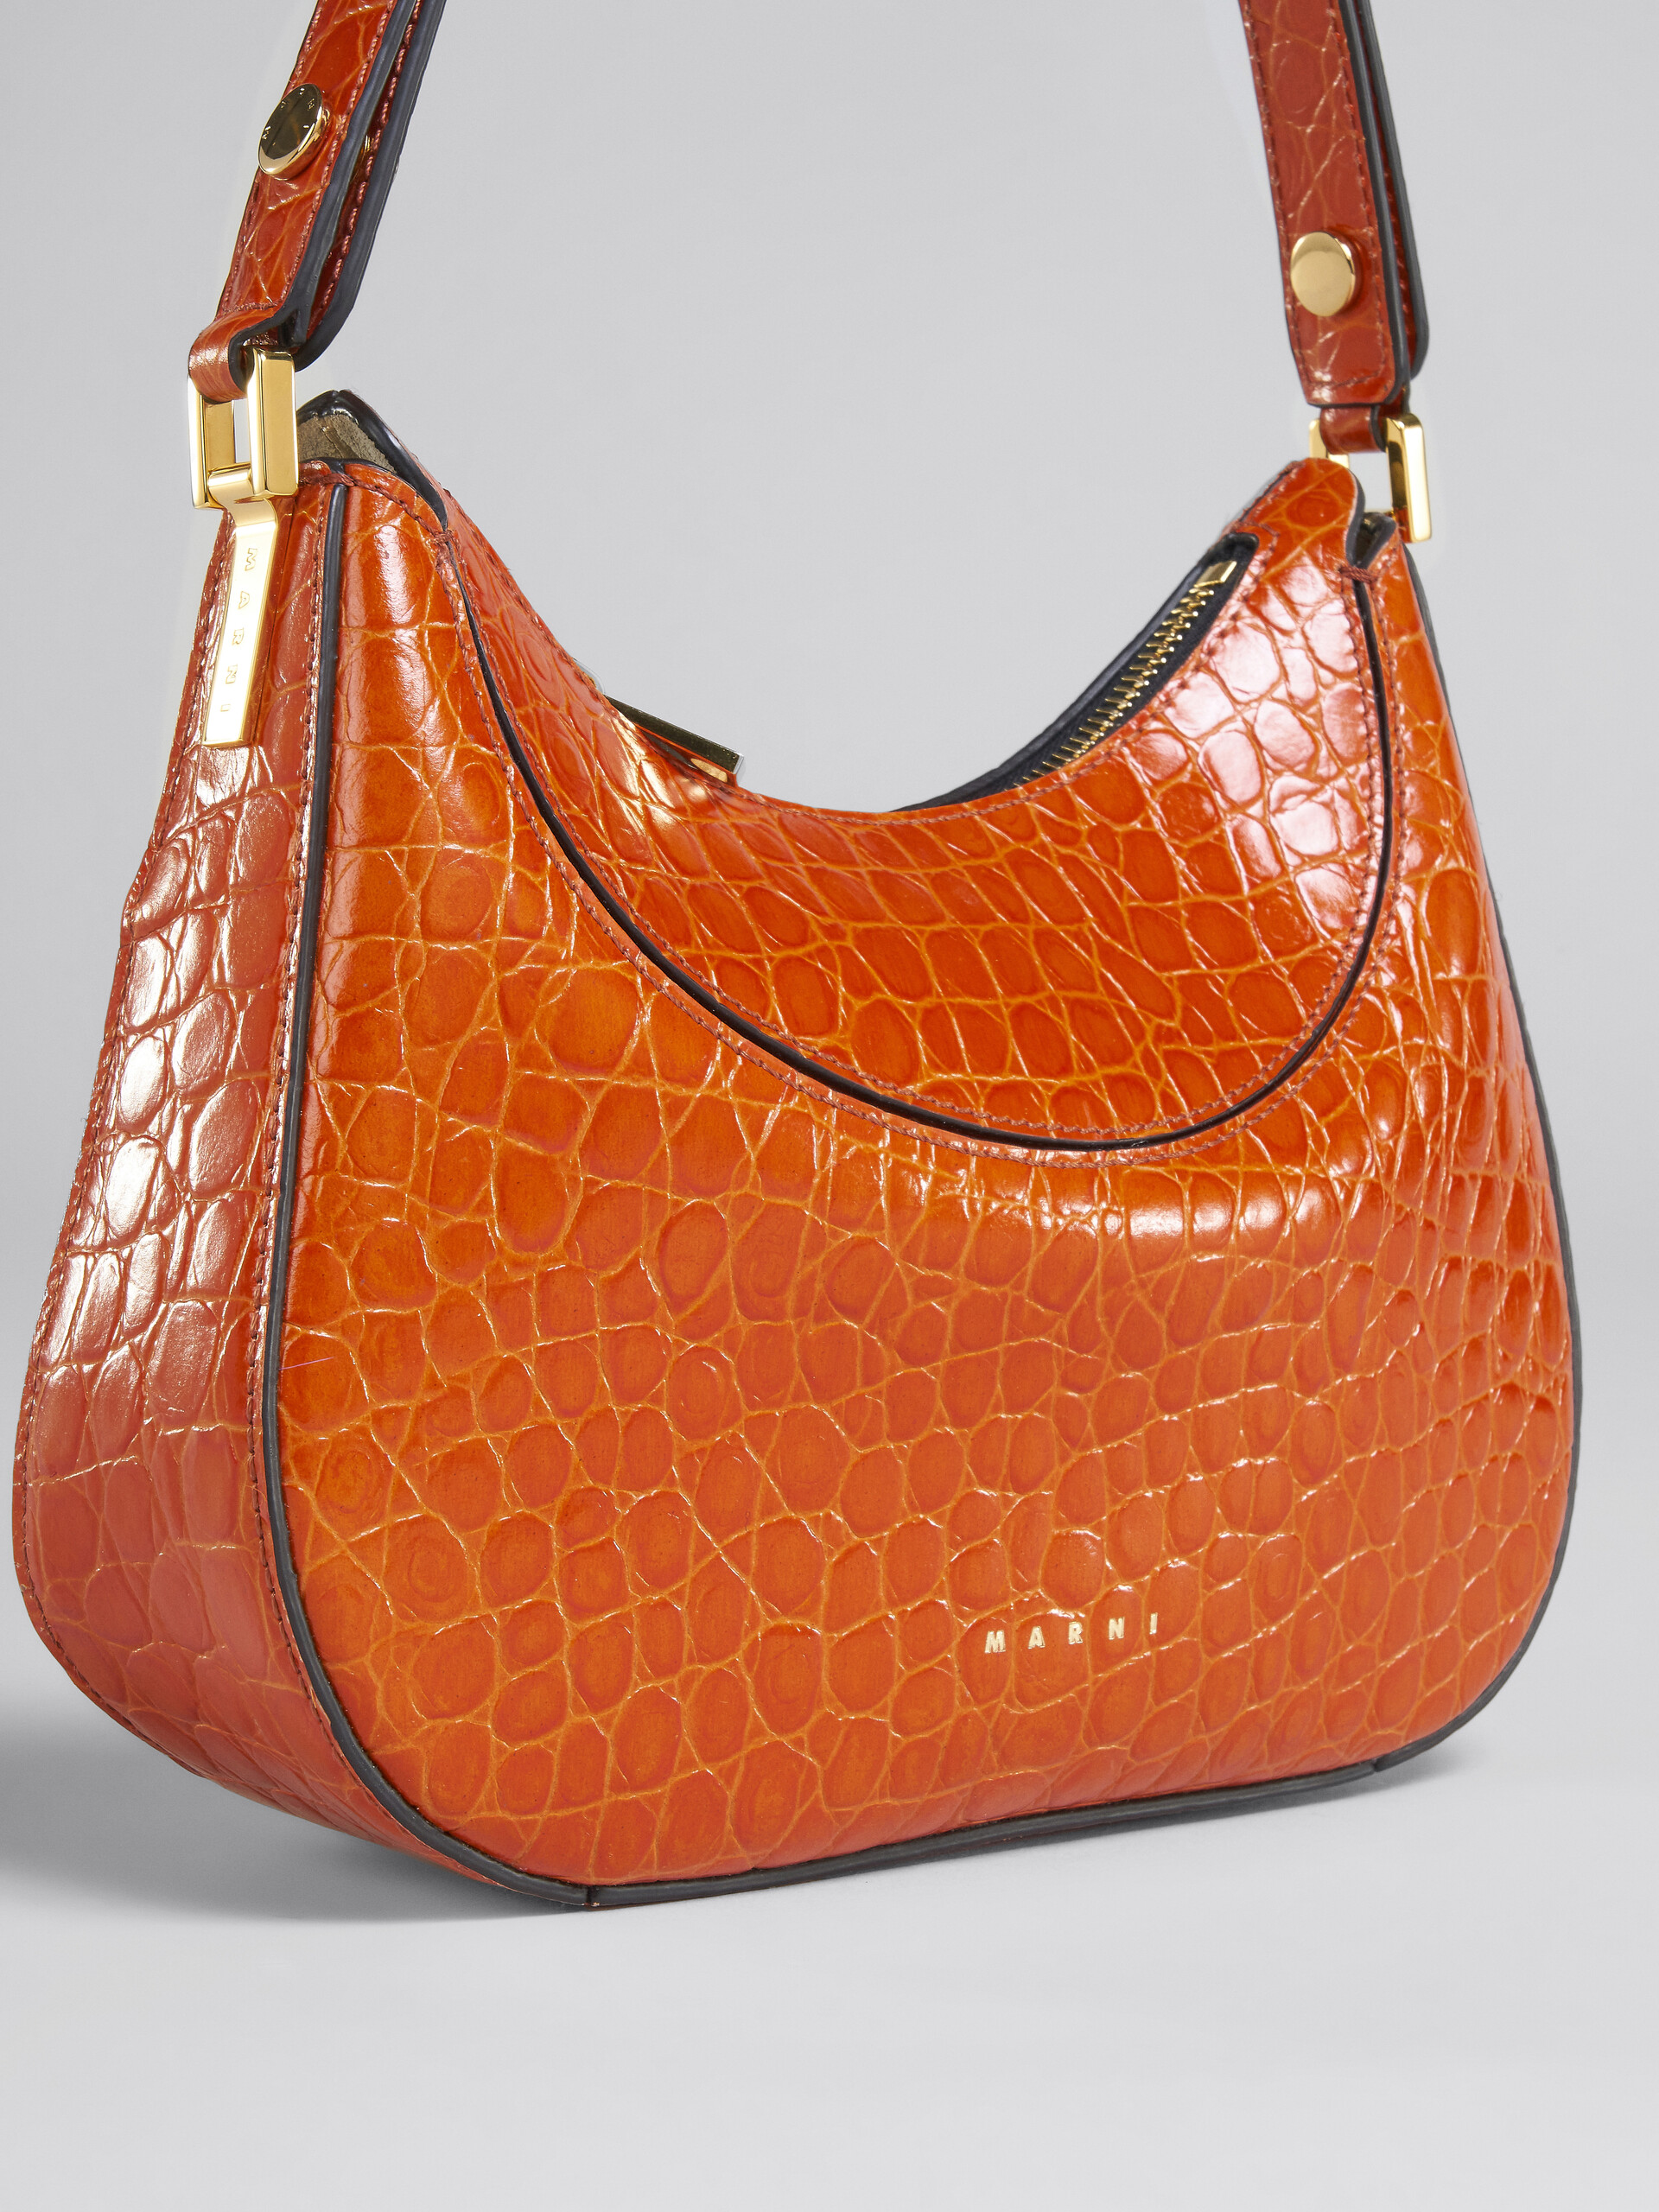 Milano Mini Bag in orange croco print leather - Handbags - Image 5